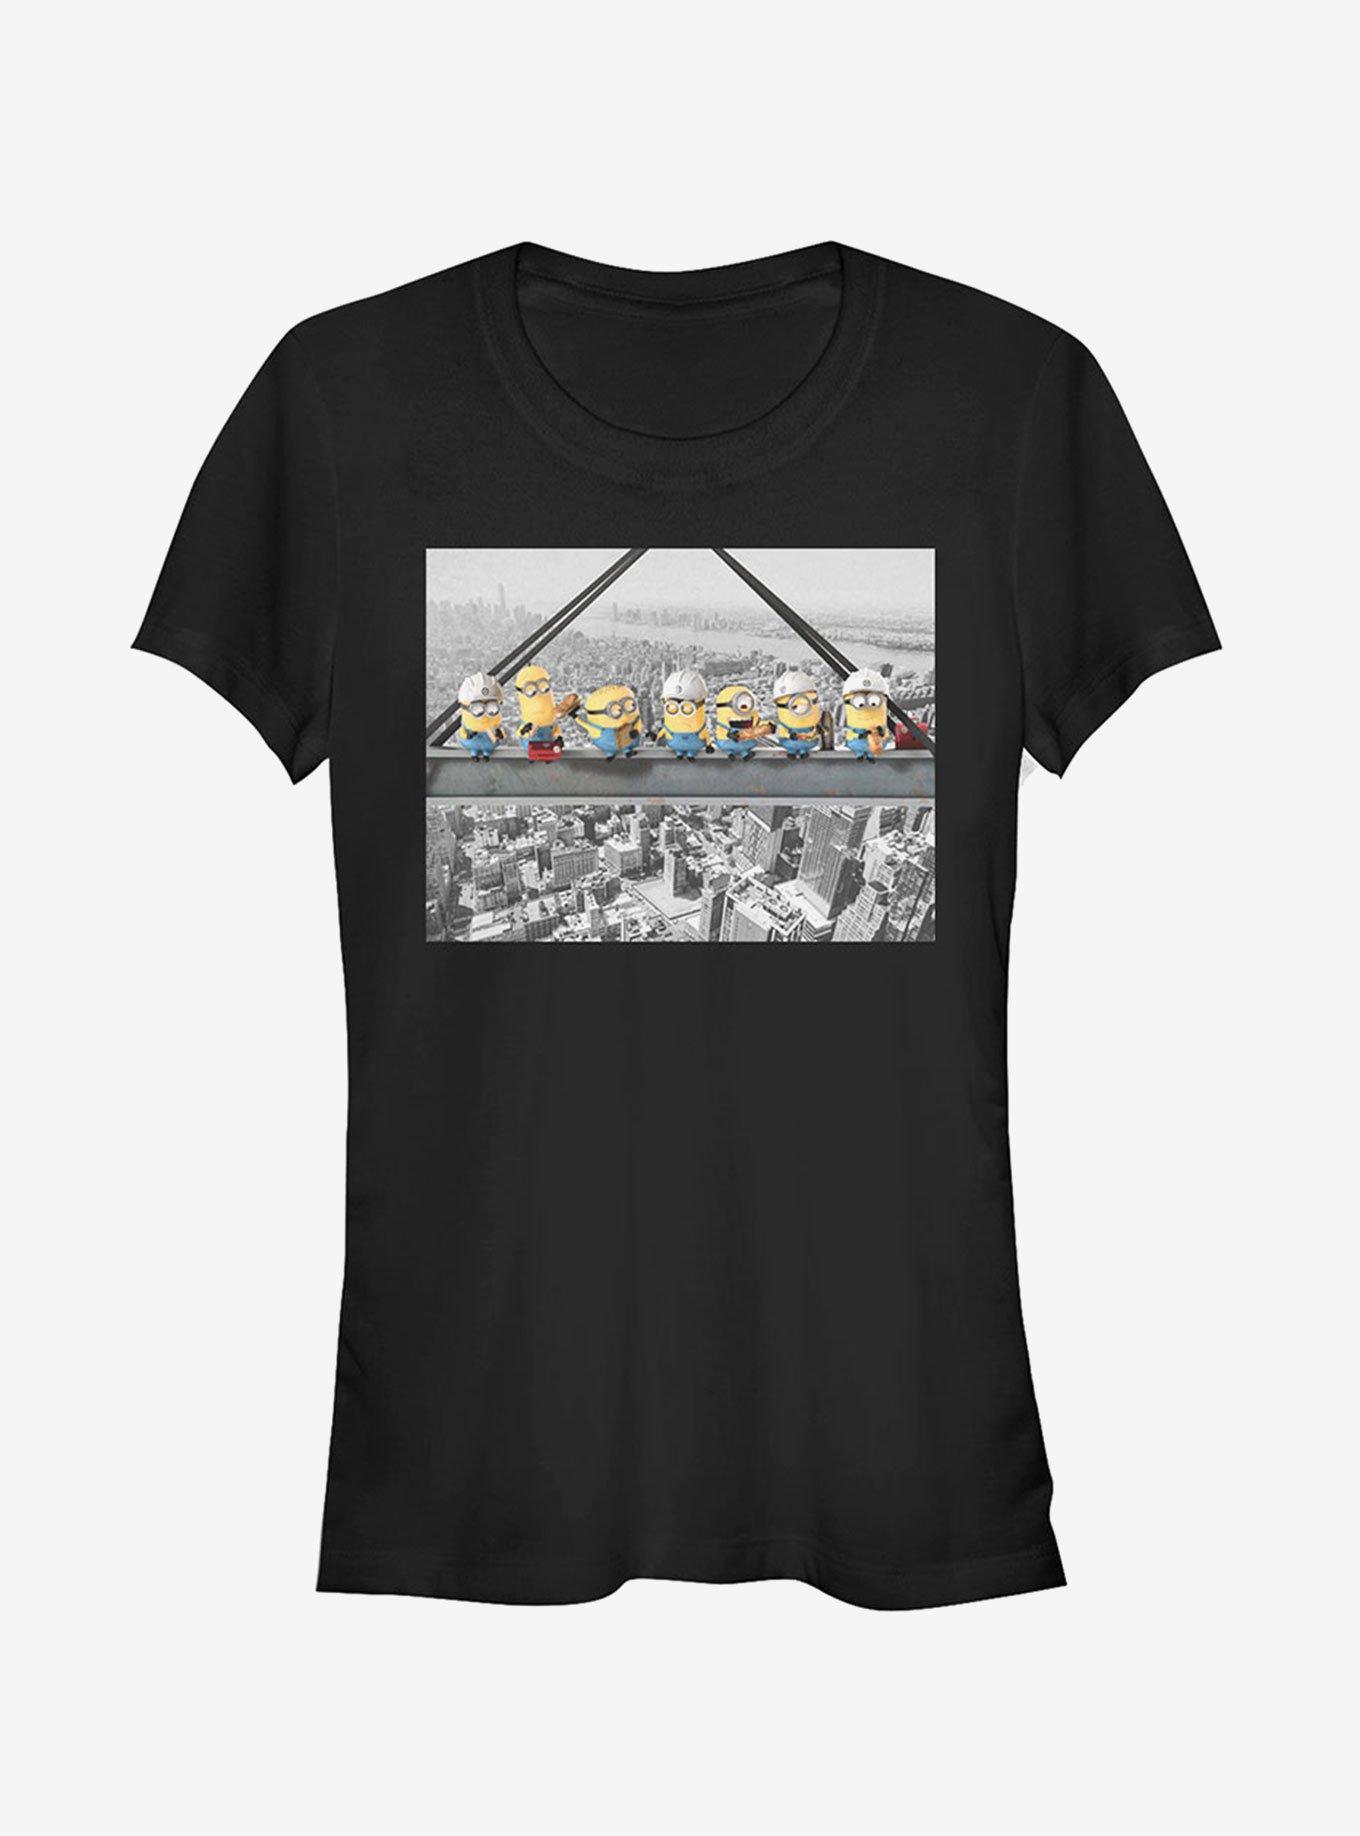 Minion Construction Lunch Girls T-Shirt